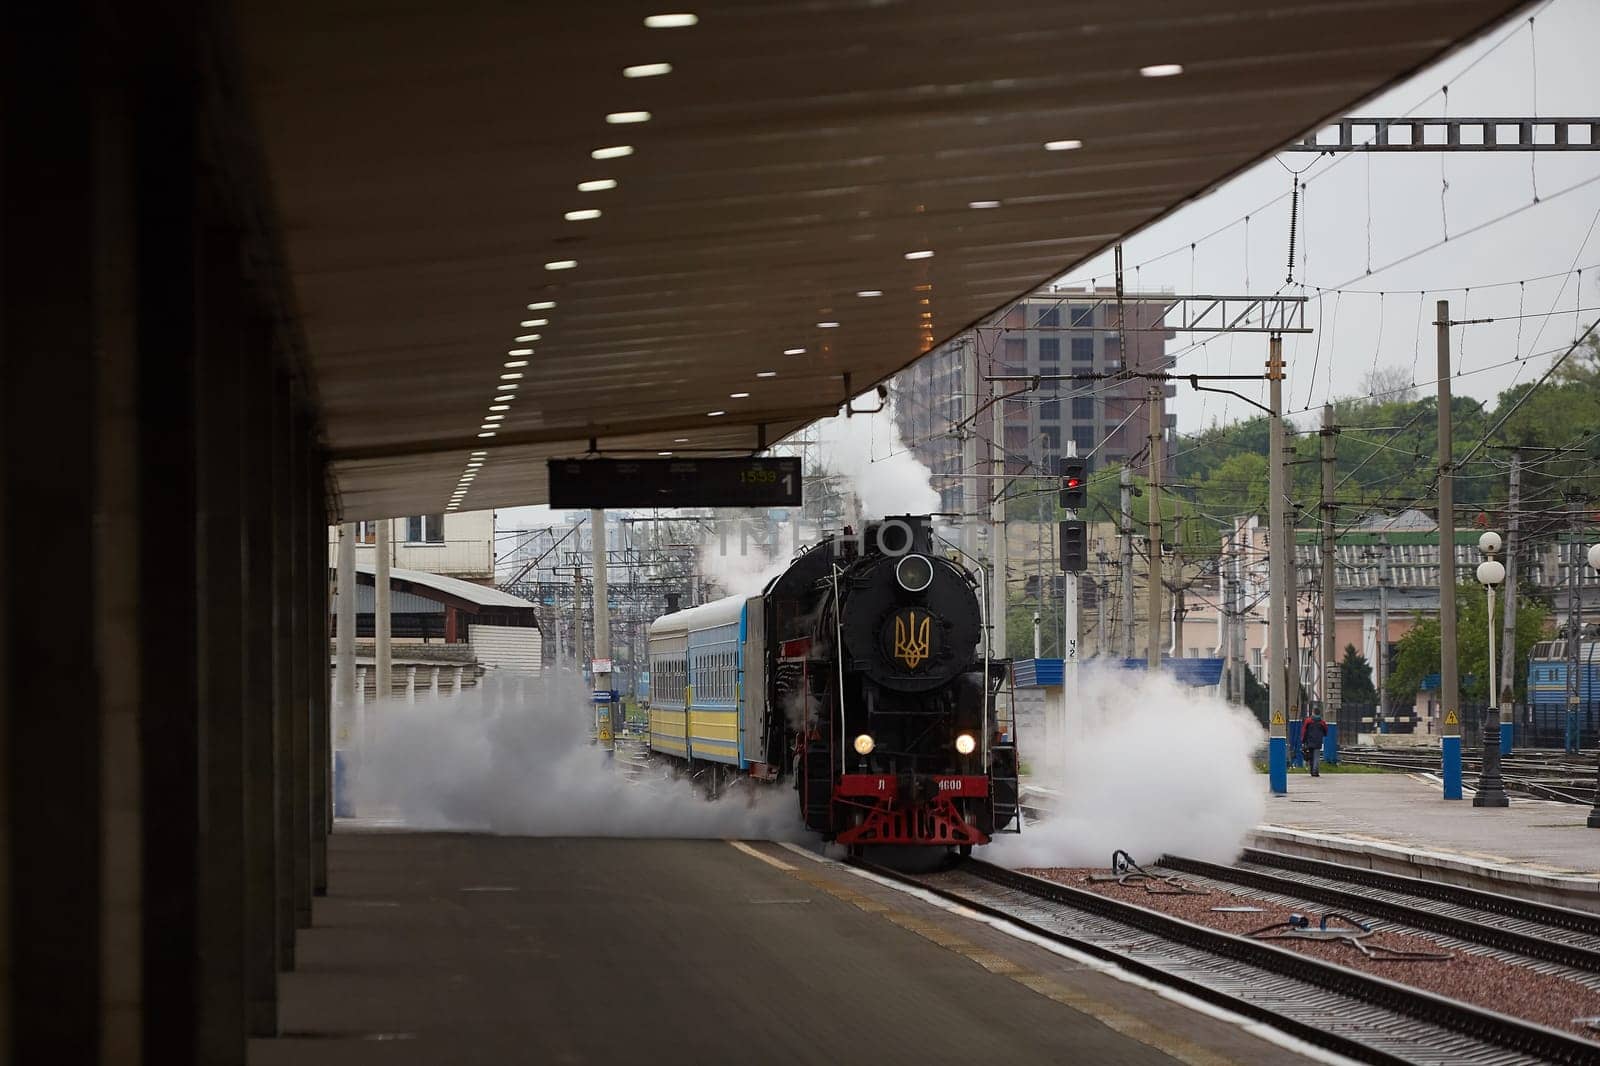 old train steam locomotive on the platform. High quality photo